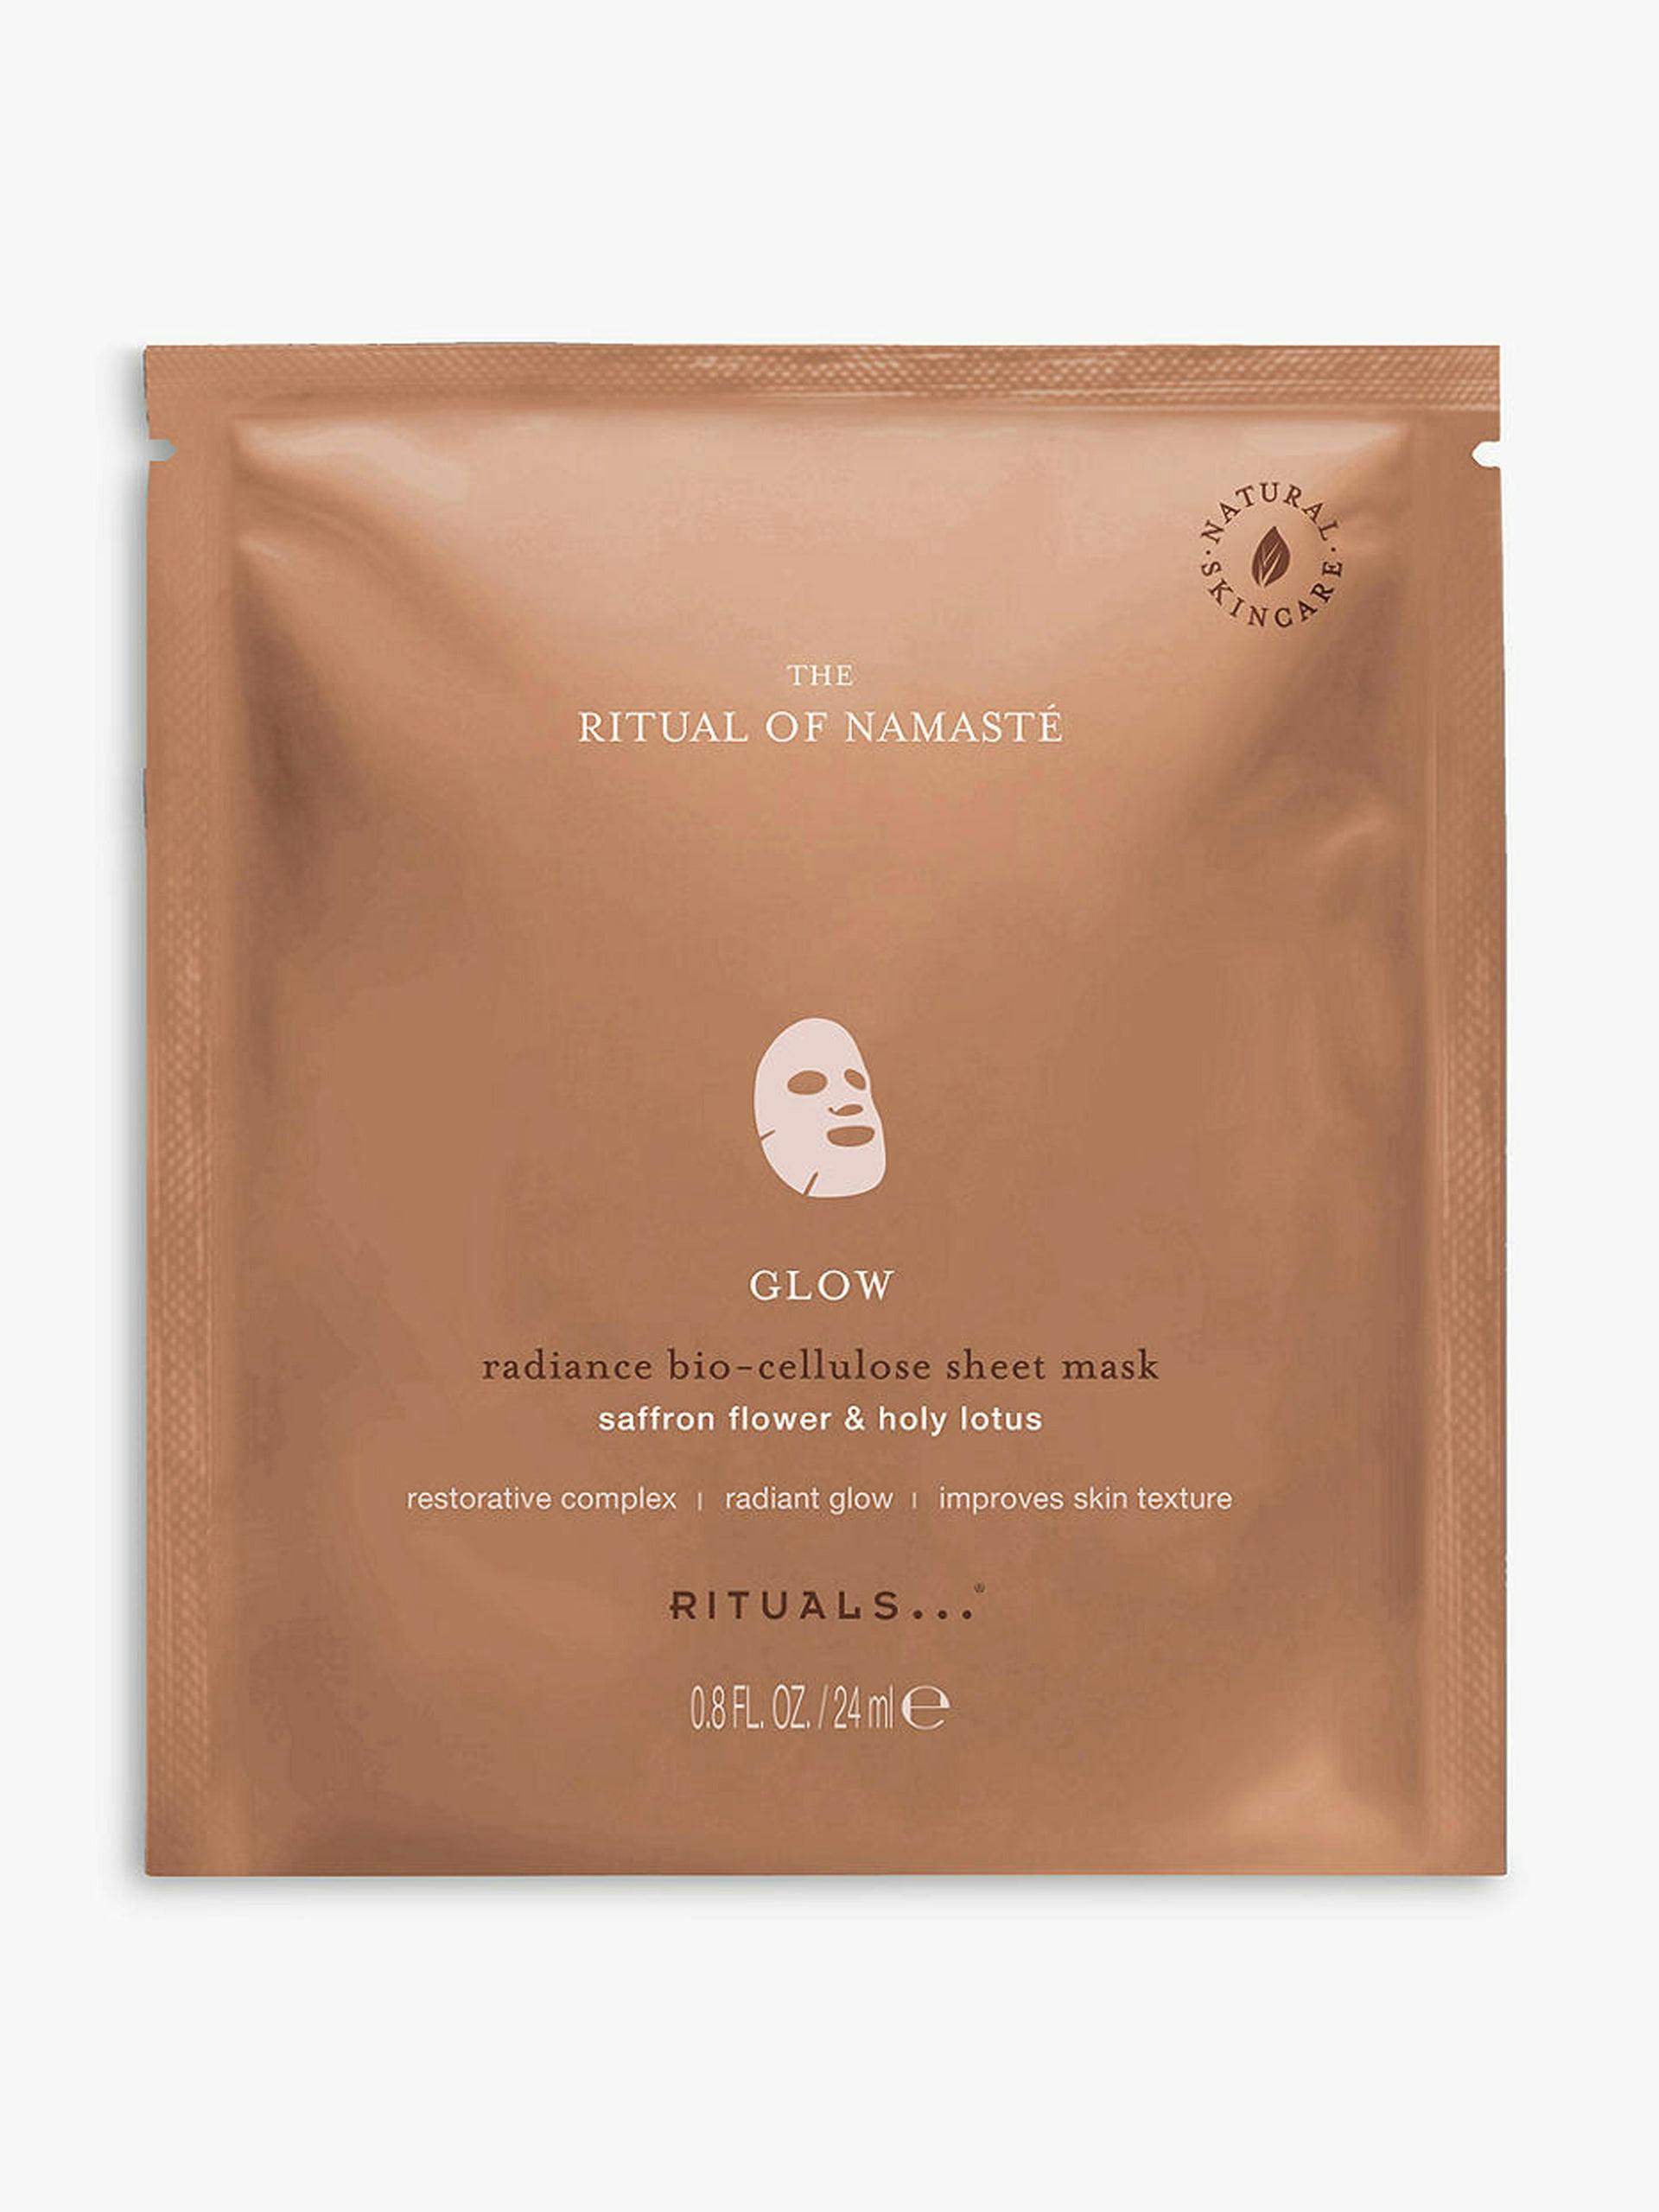 Glow radiance sheet mask